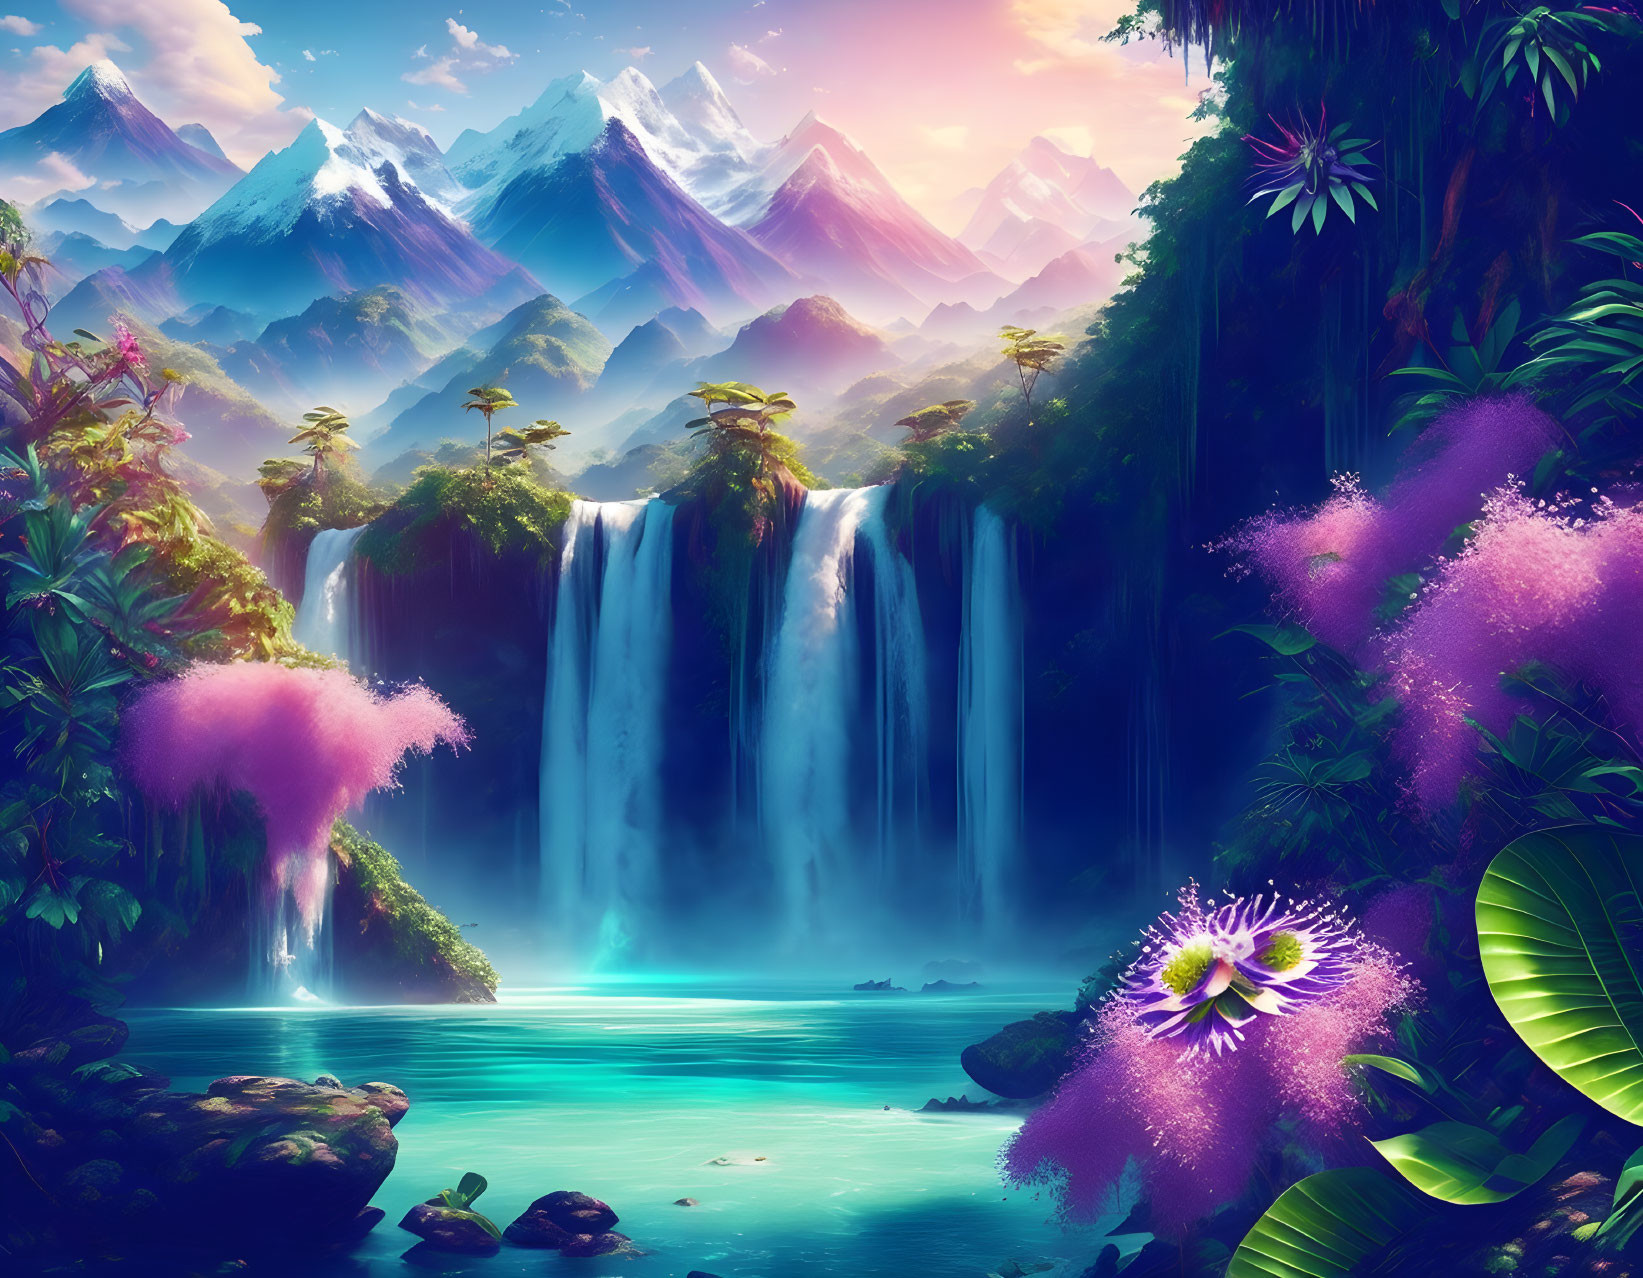 Digital artwork of serene waterfall, lush foliage, purple flowers, and misty mountains.